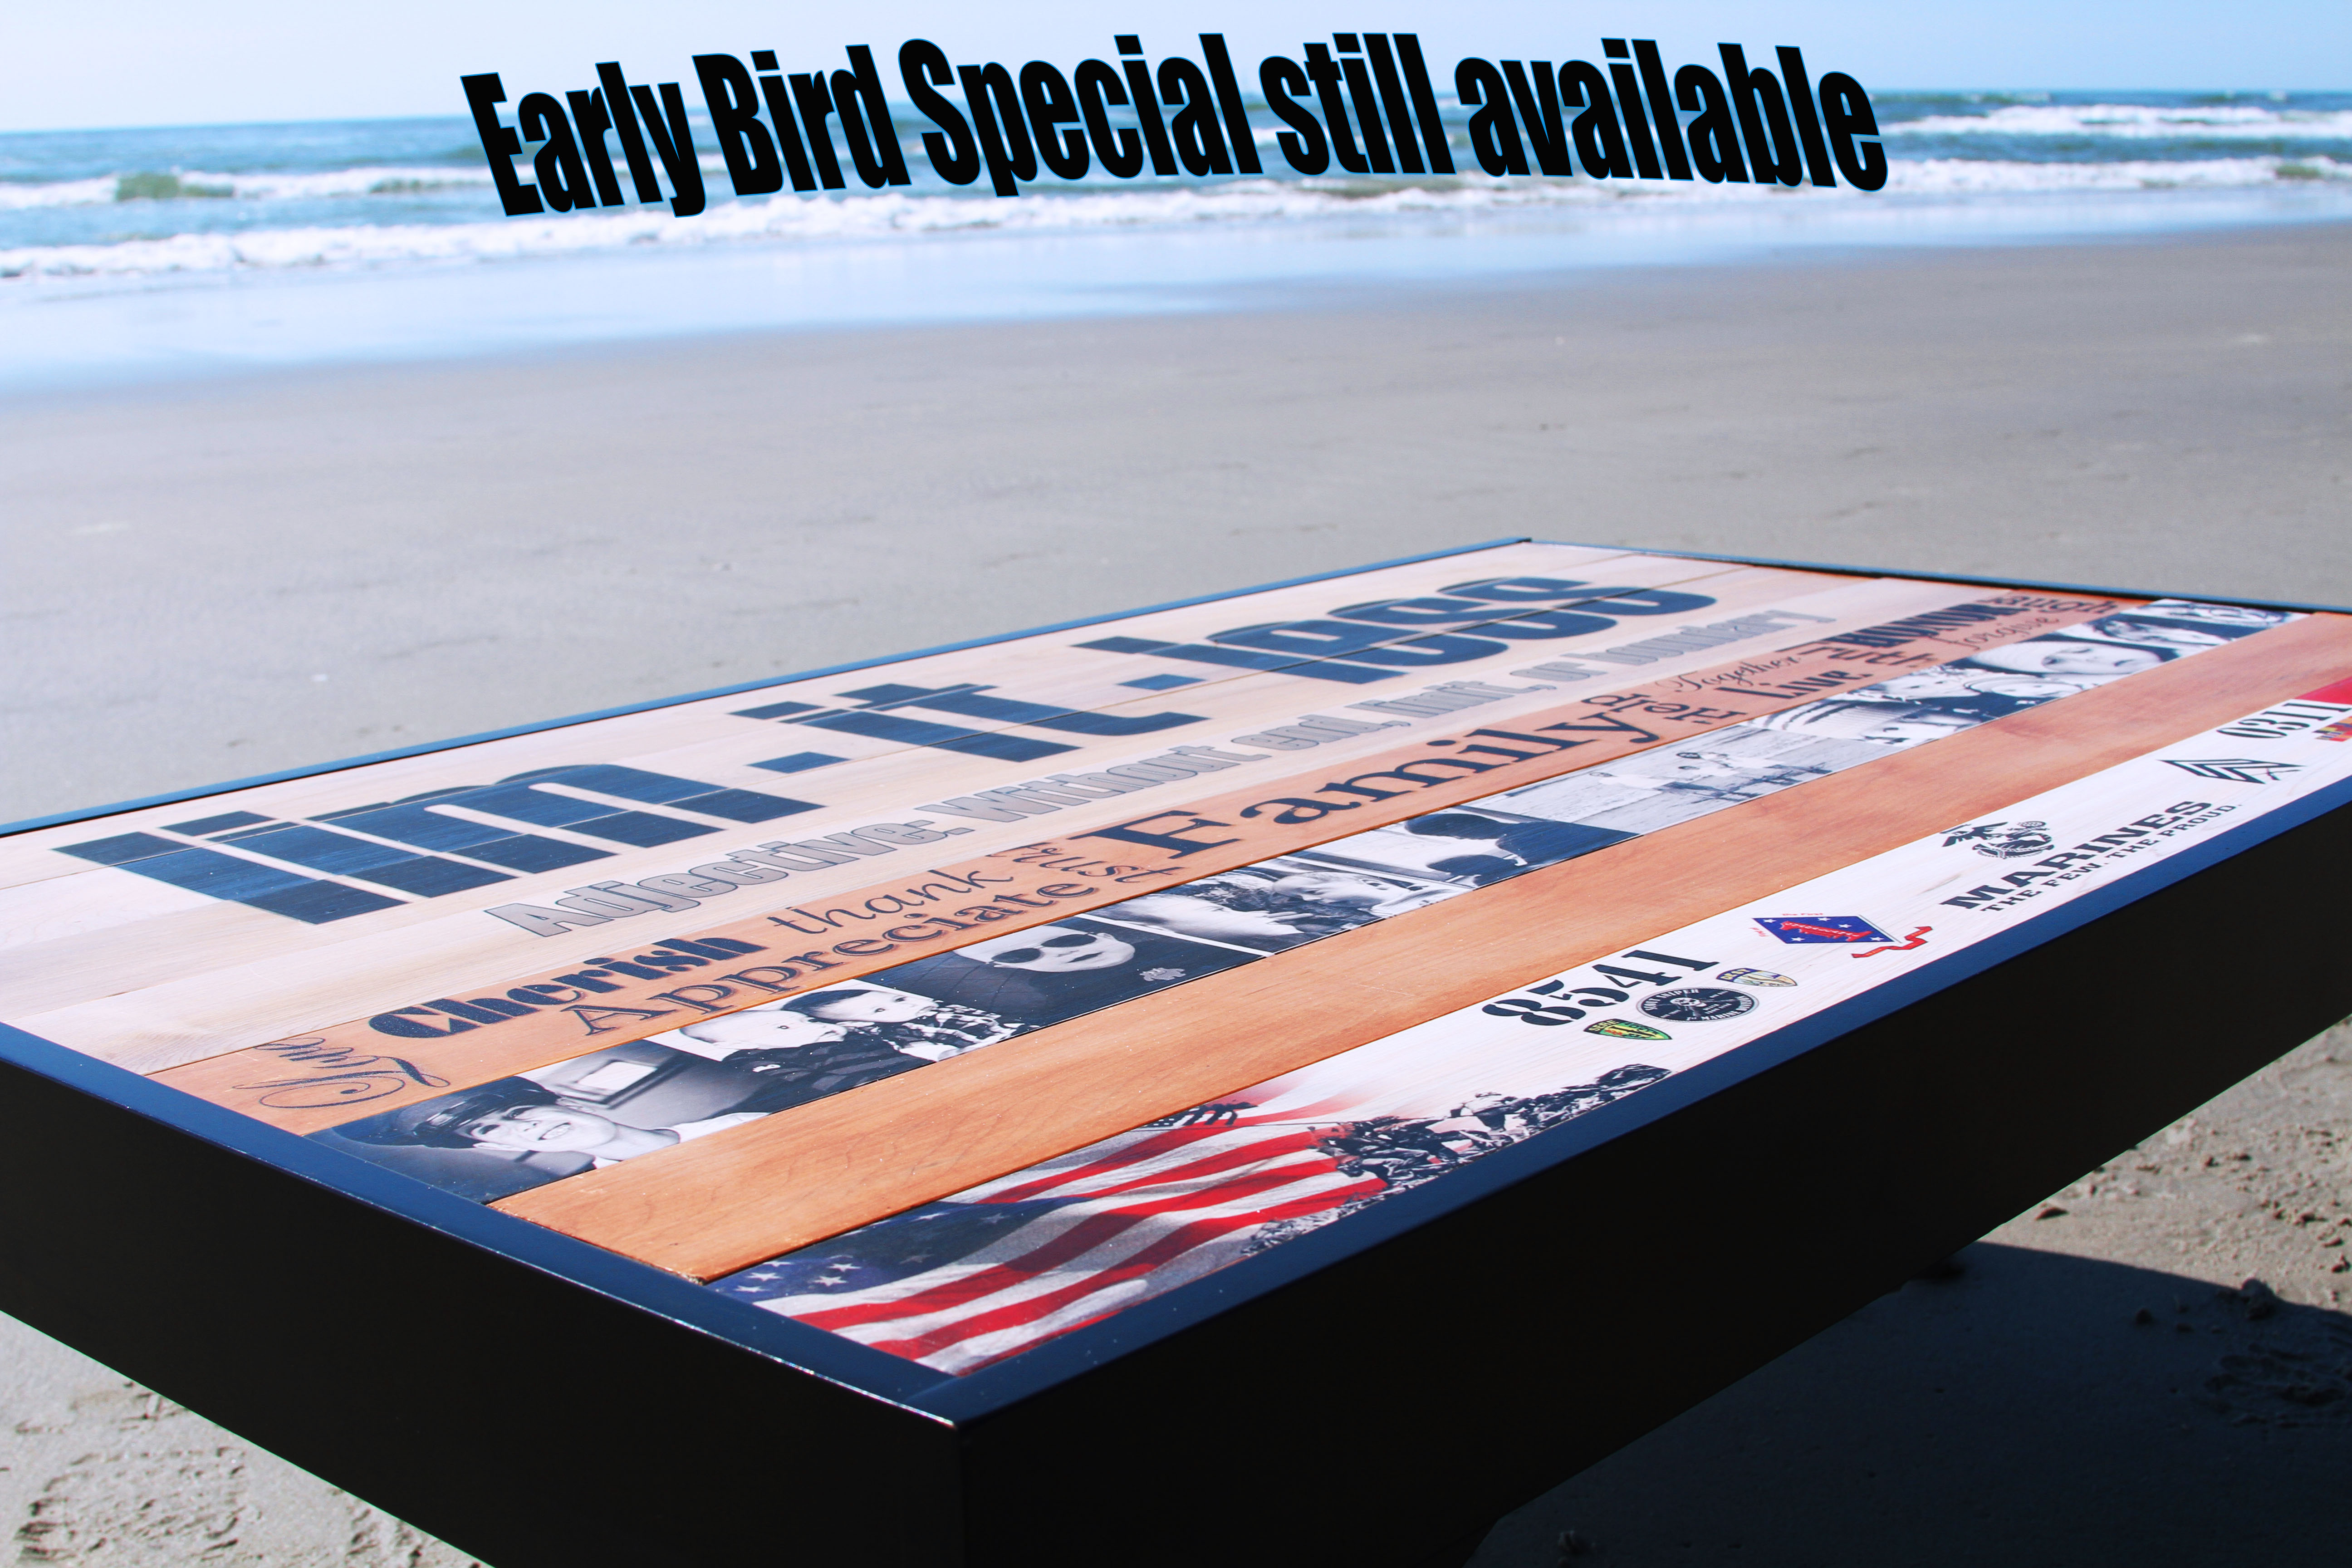 Early Bird Special.jpg